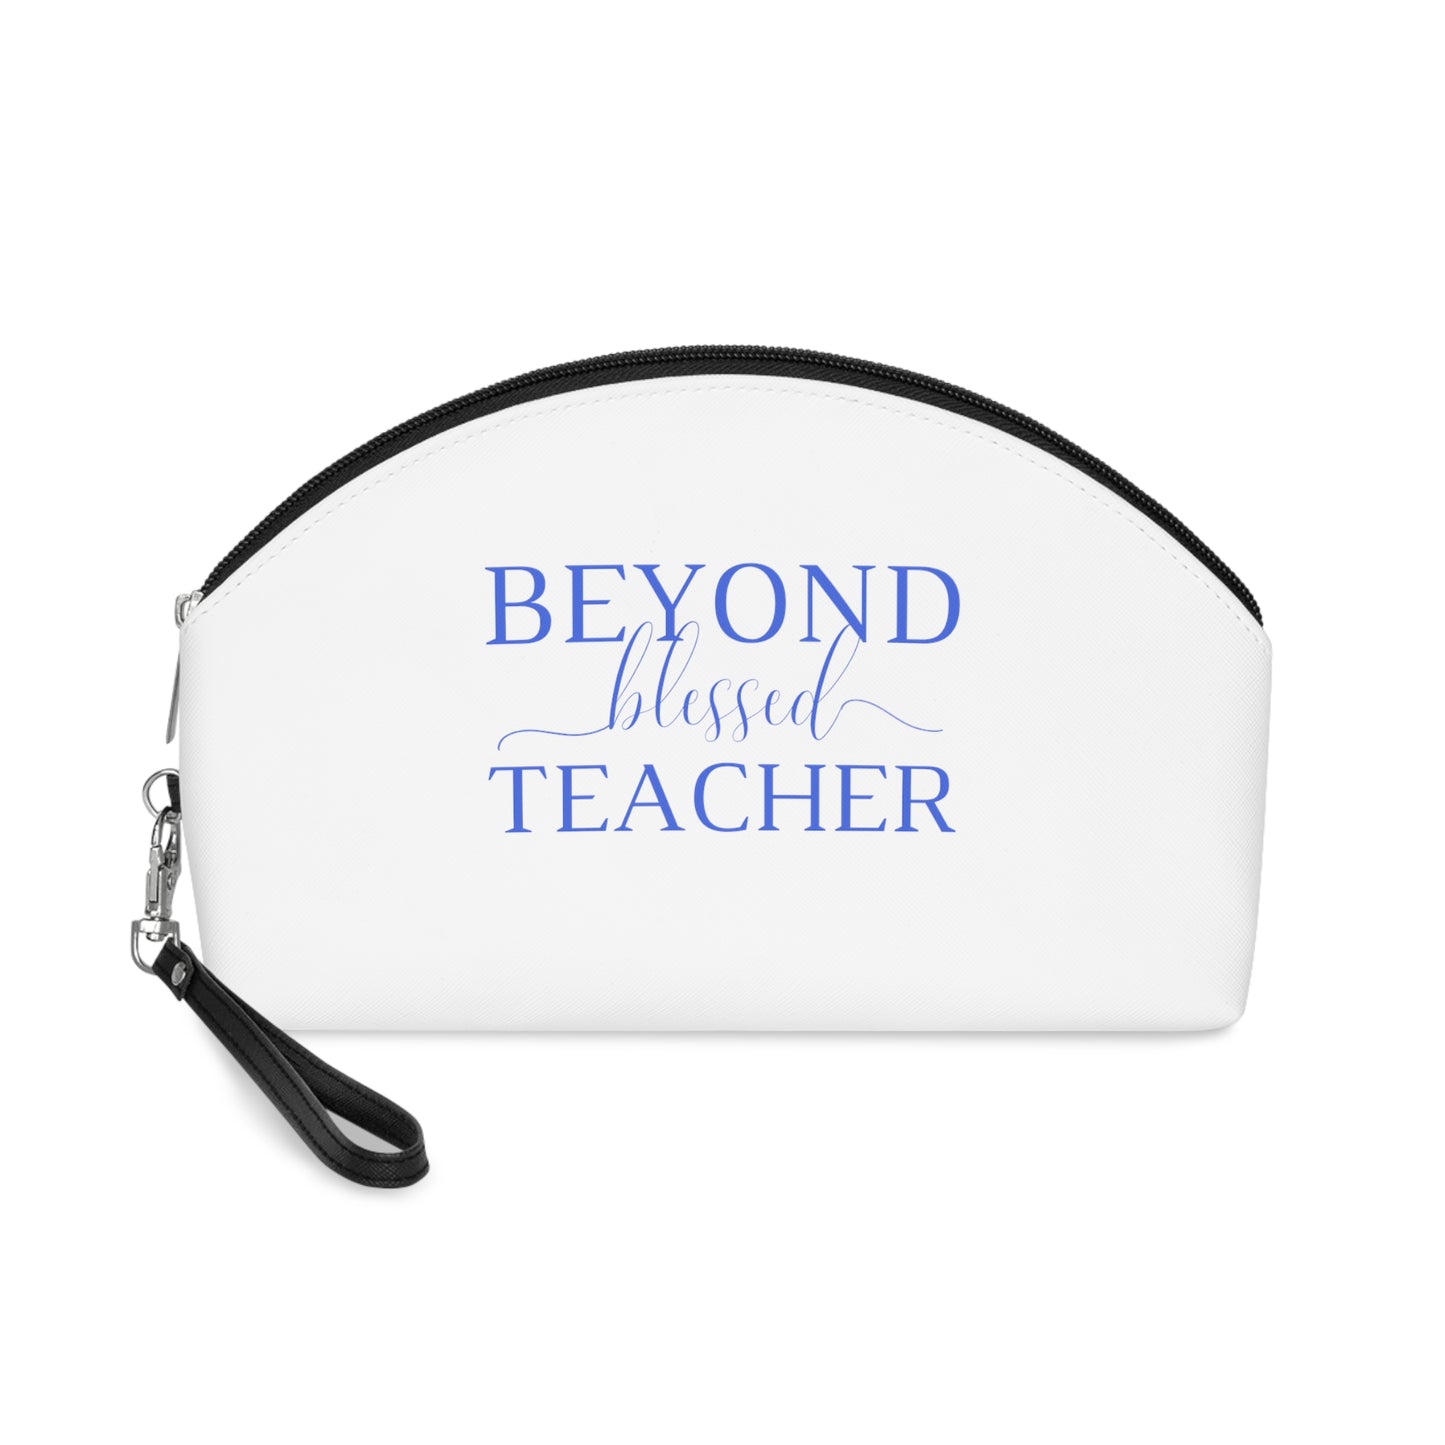 Beyond Blessed Teacher - Makeup Bag - Royal Blue